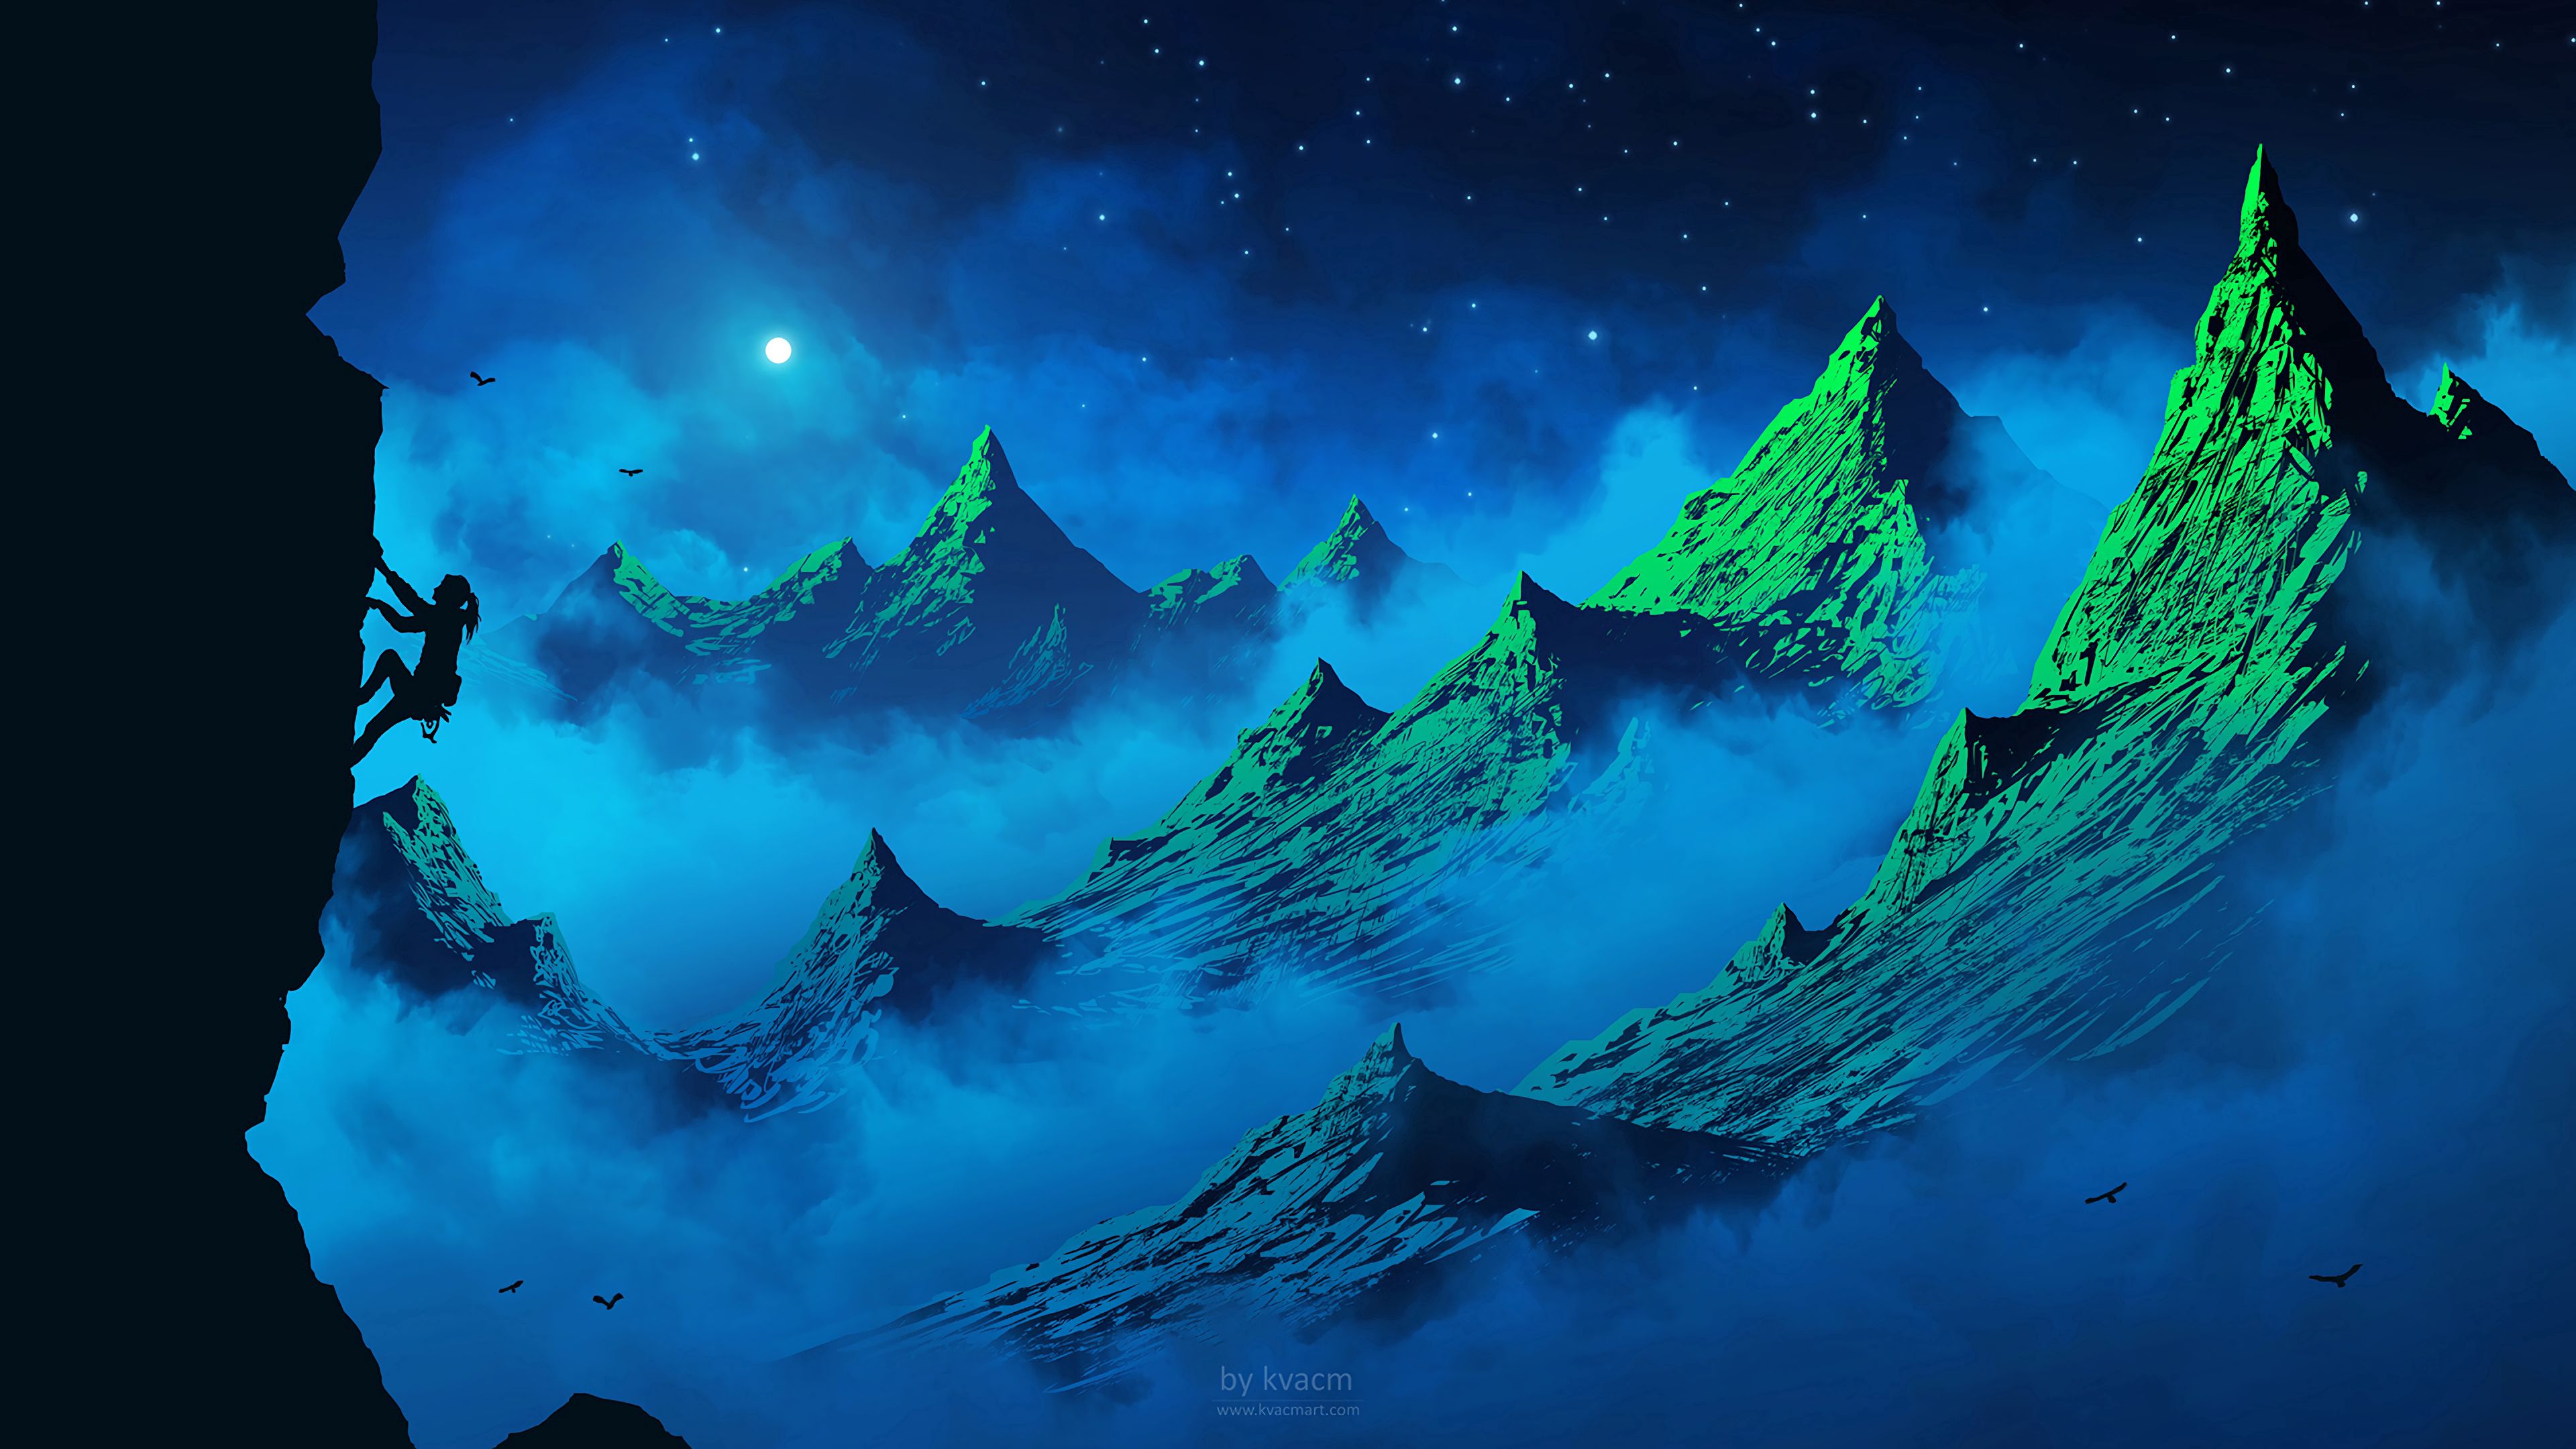 moon, silhouette, art, birds, mountains, night, fog, girl, rock climber, alpinist